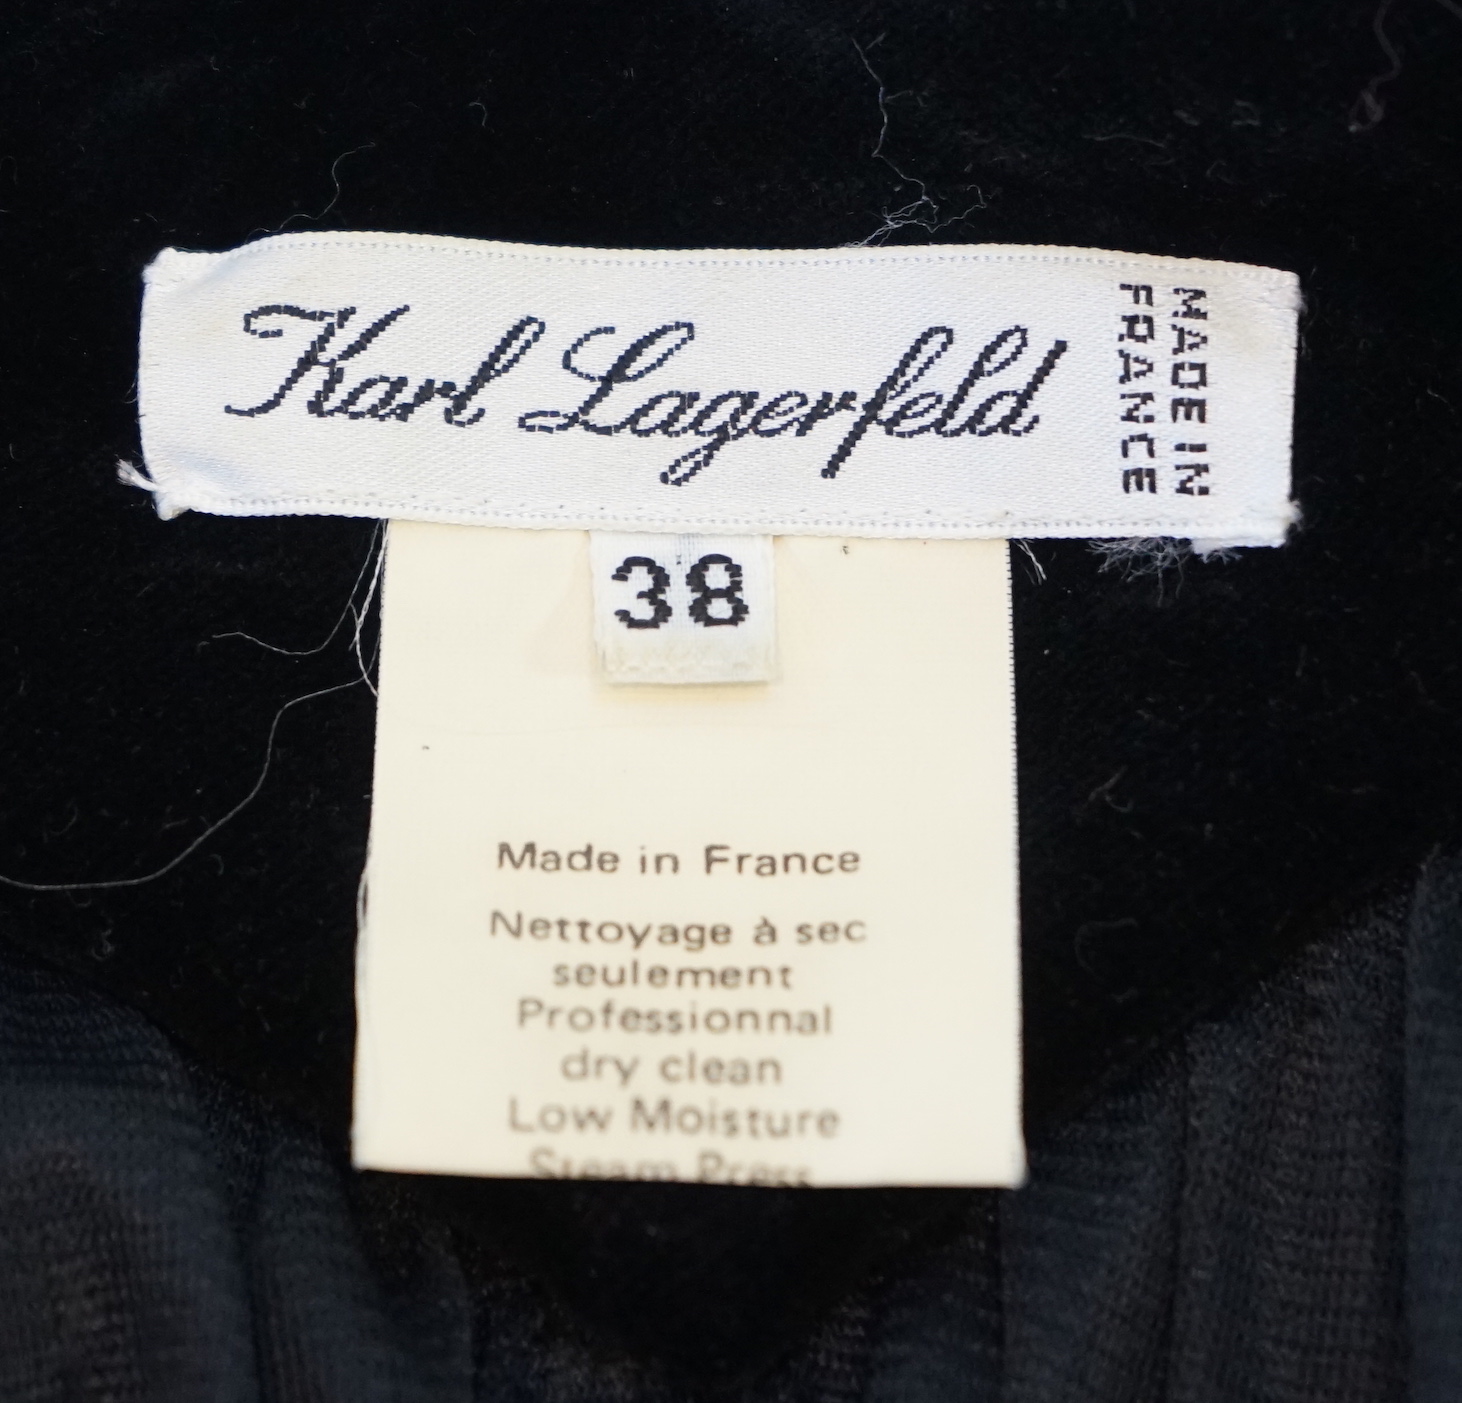 A Karl Lagerfeld black evening dress, stunning dress, velvet collar and velvet cuffs with gold - Image 11 of 11